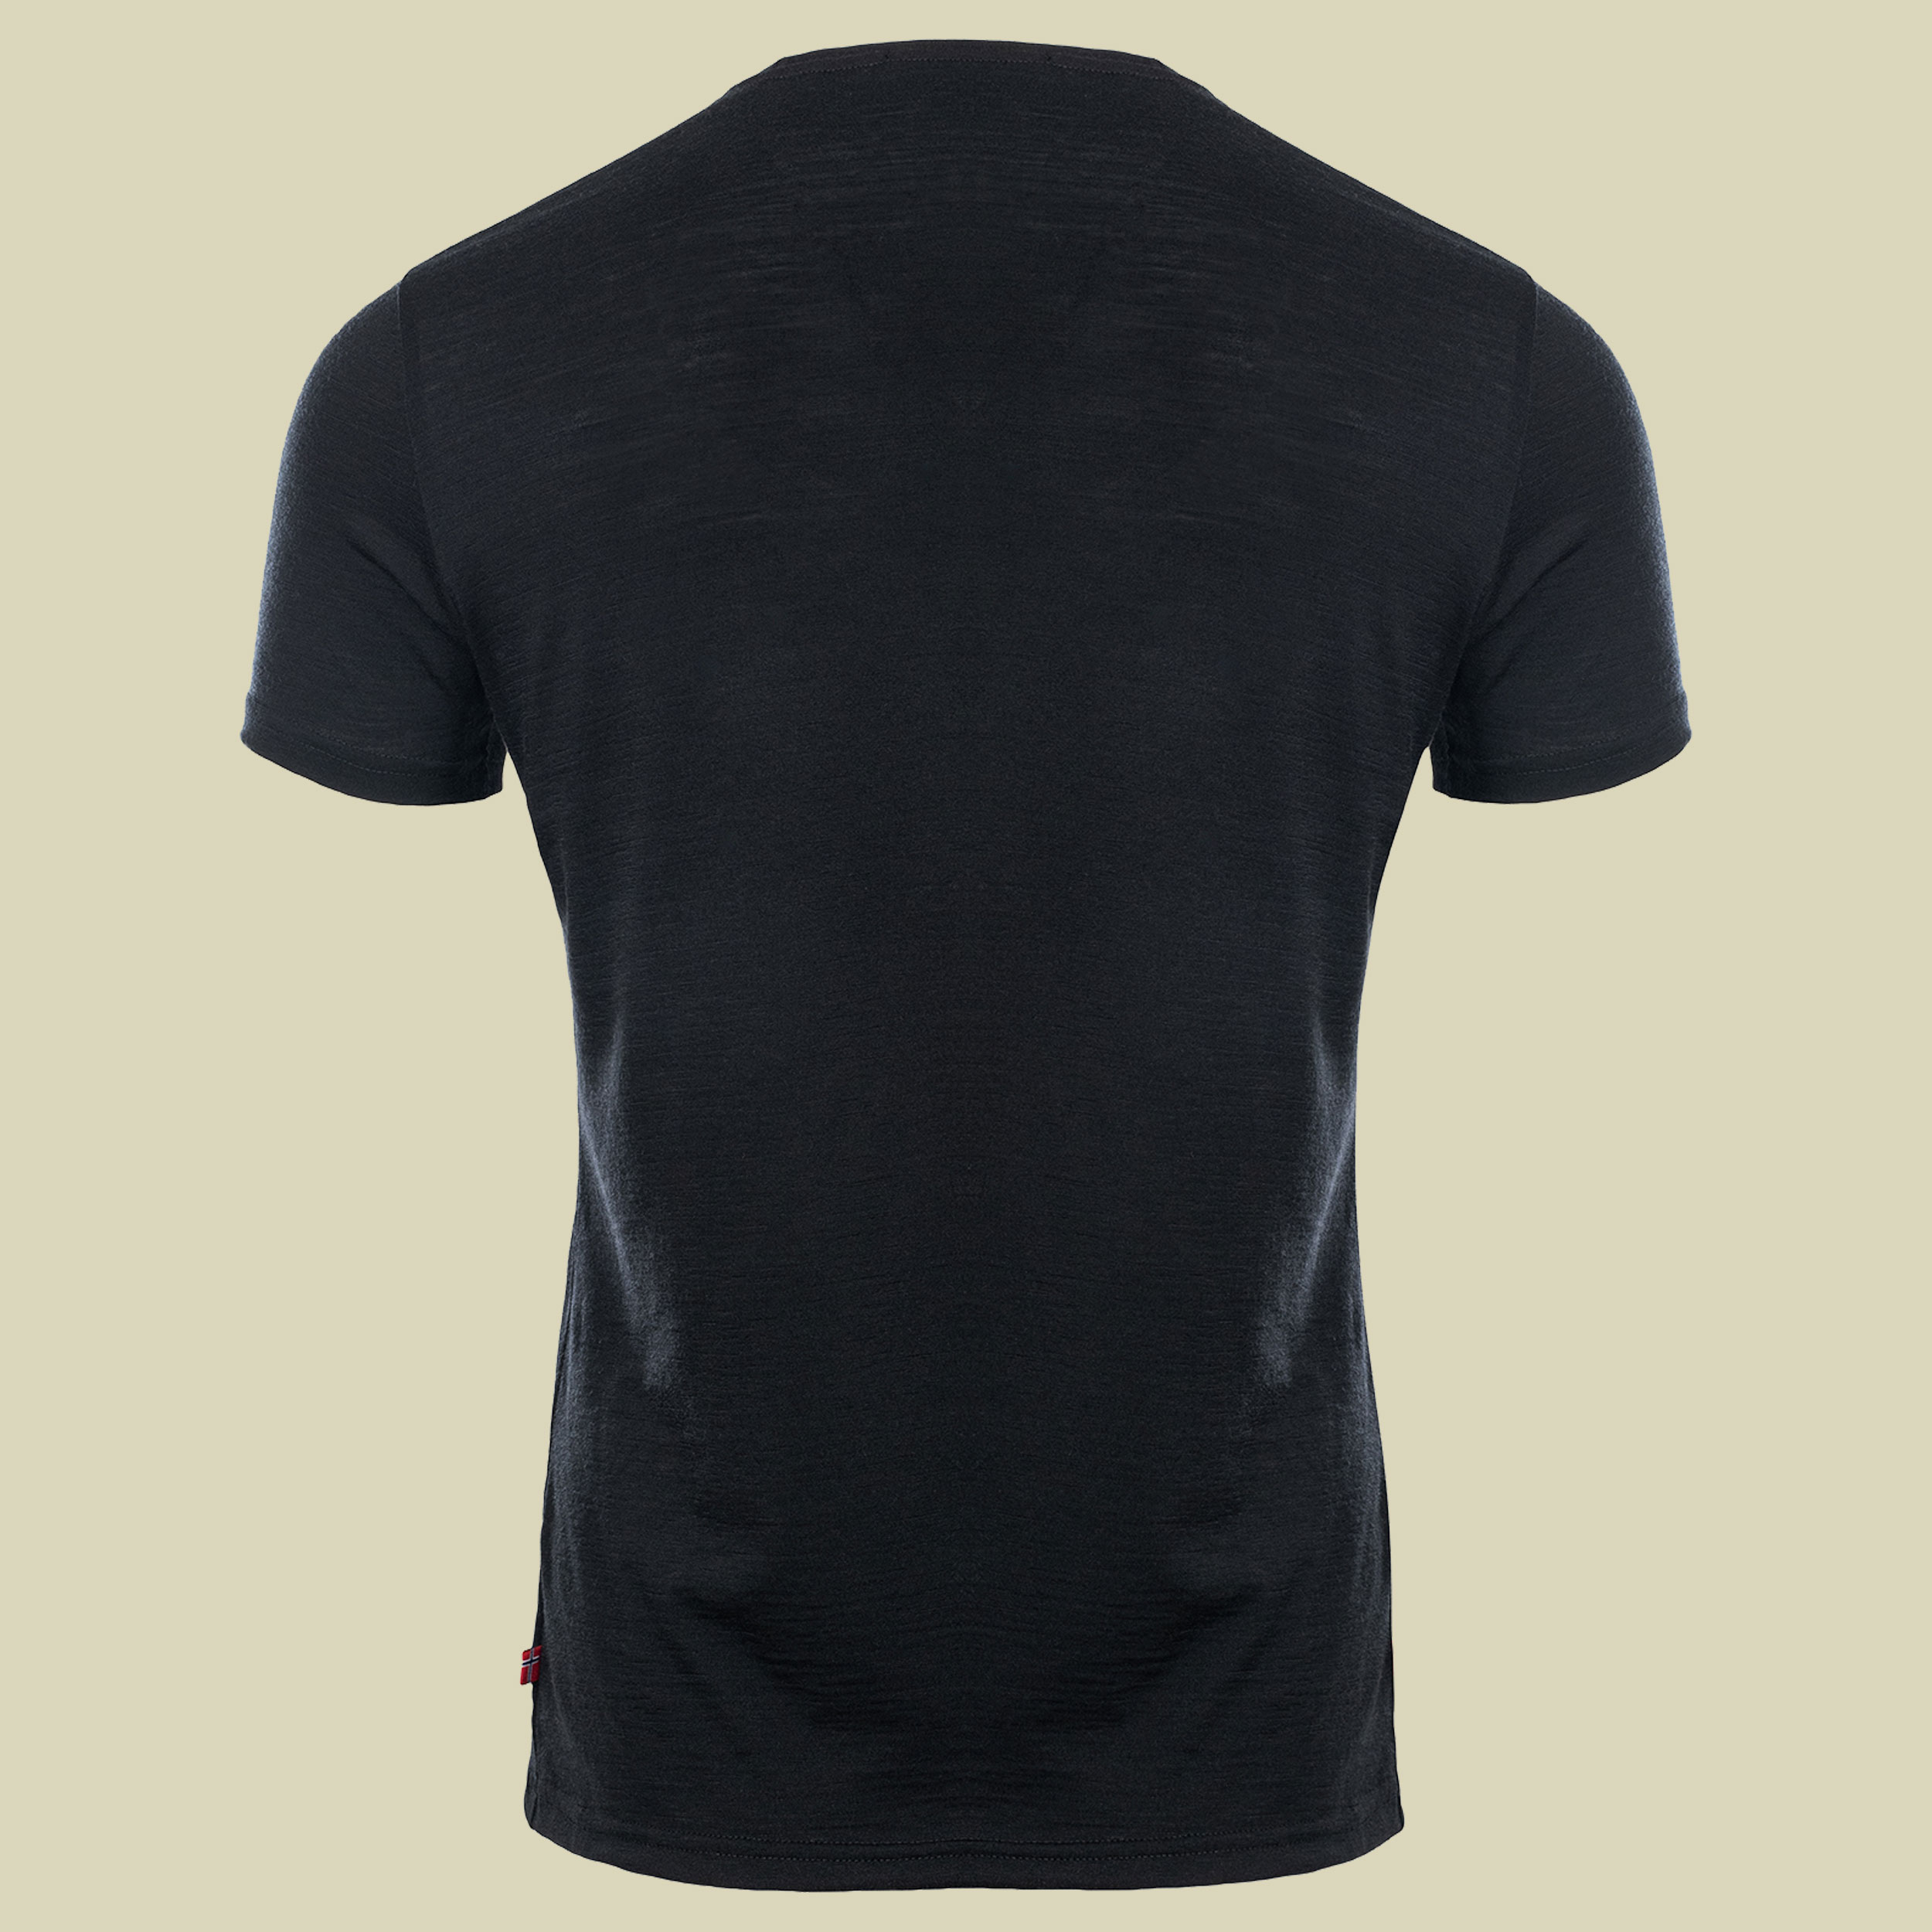 LightWool T-Shirt Men schwarz XL - jet black